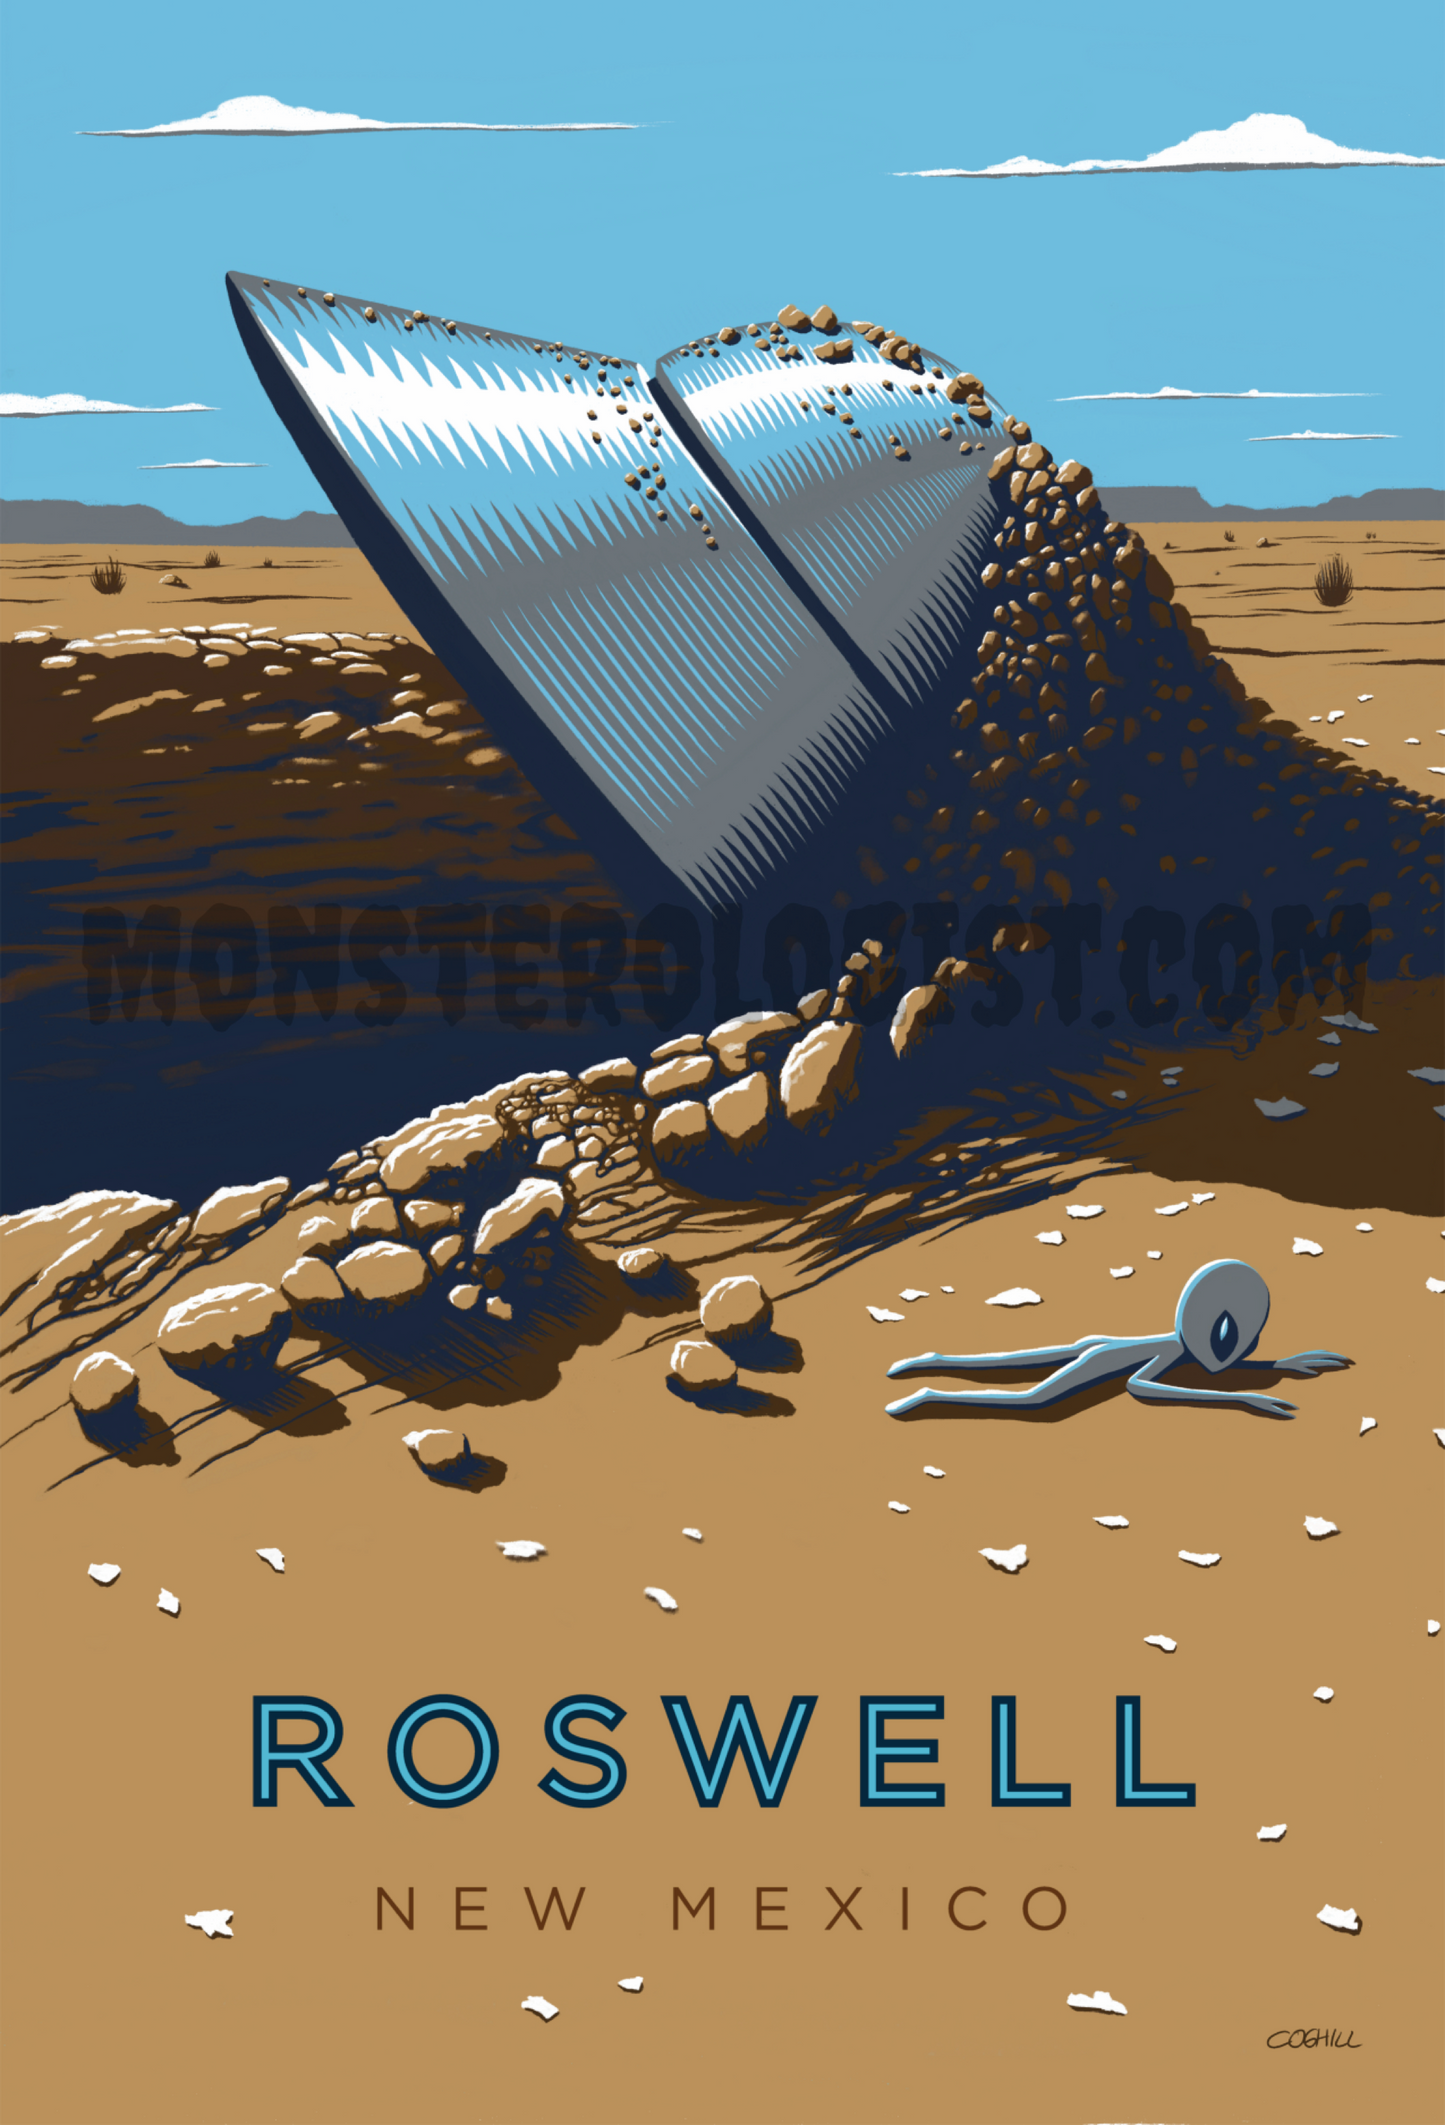 Roswell, New Mexico UFO crash travel postcard 6x9